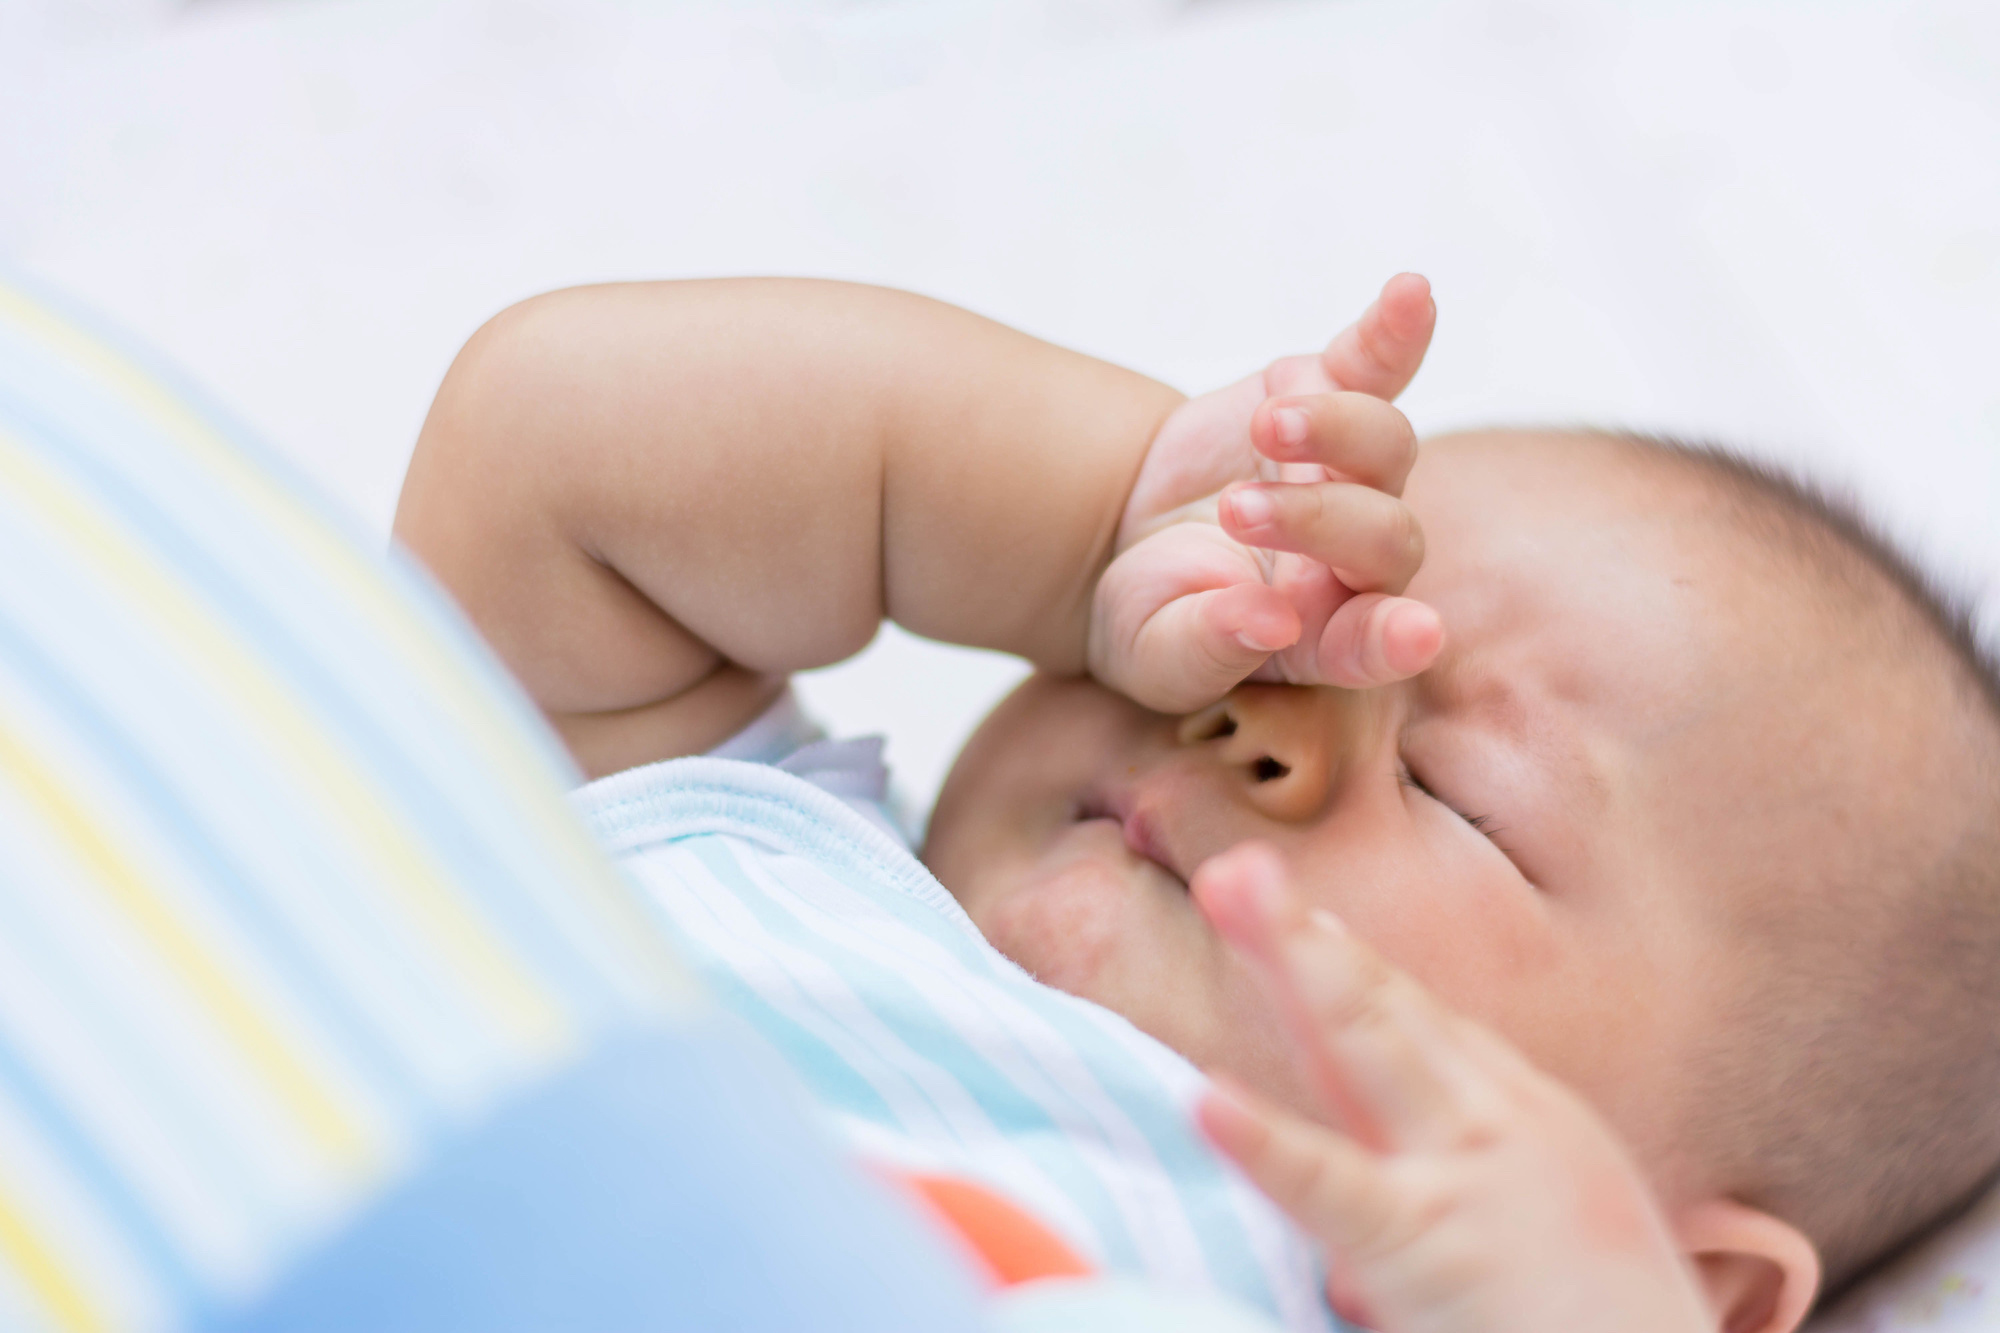 Infant brain test: MedlinePlus Medical Encyclopedia Image